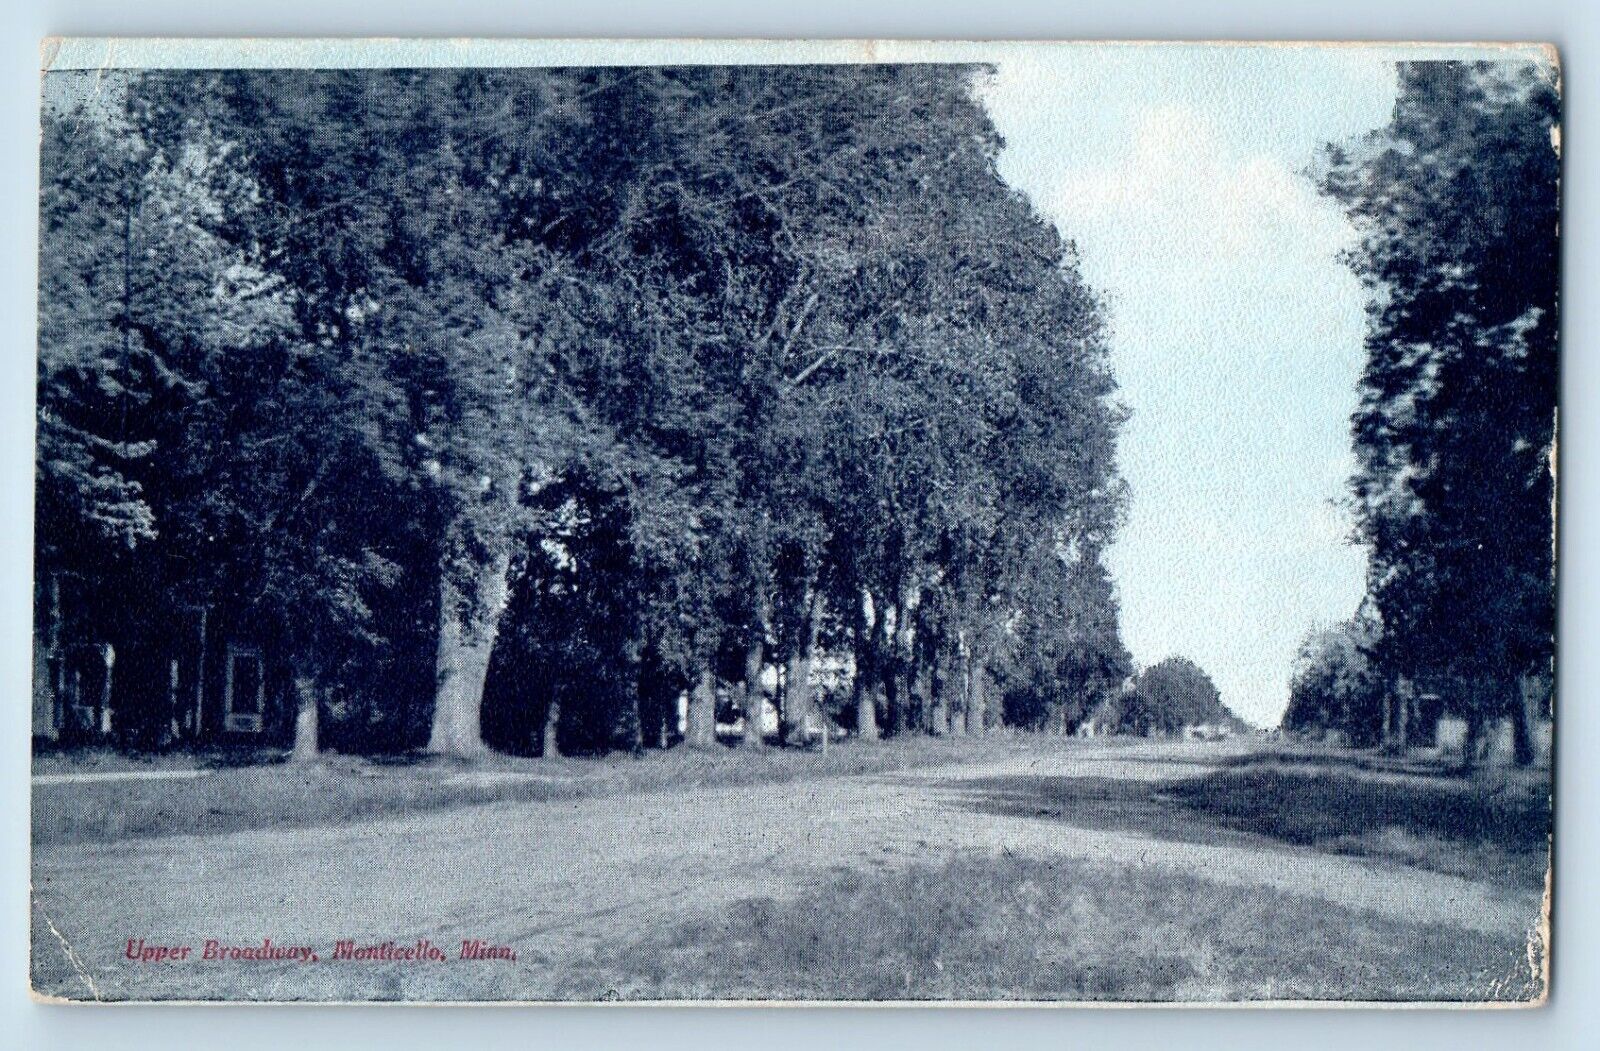 Monticello Minnesota Postcard Upper Broadway Exterior View 1910 Vintage Antique